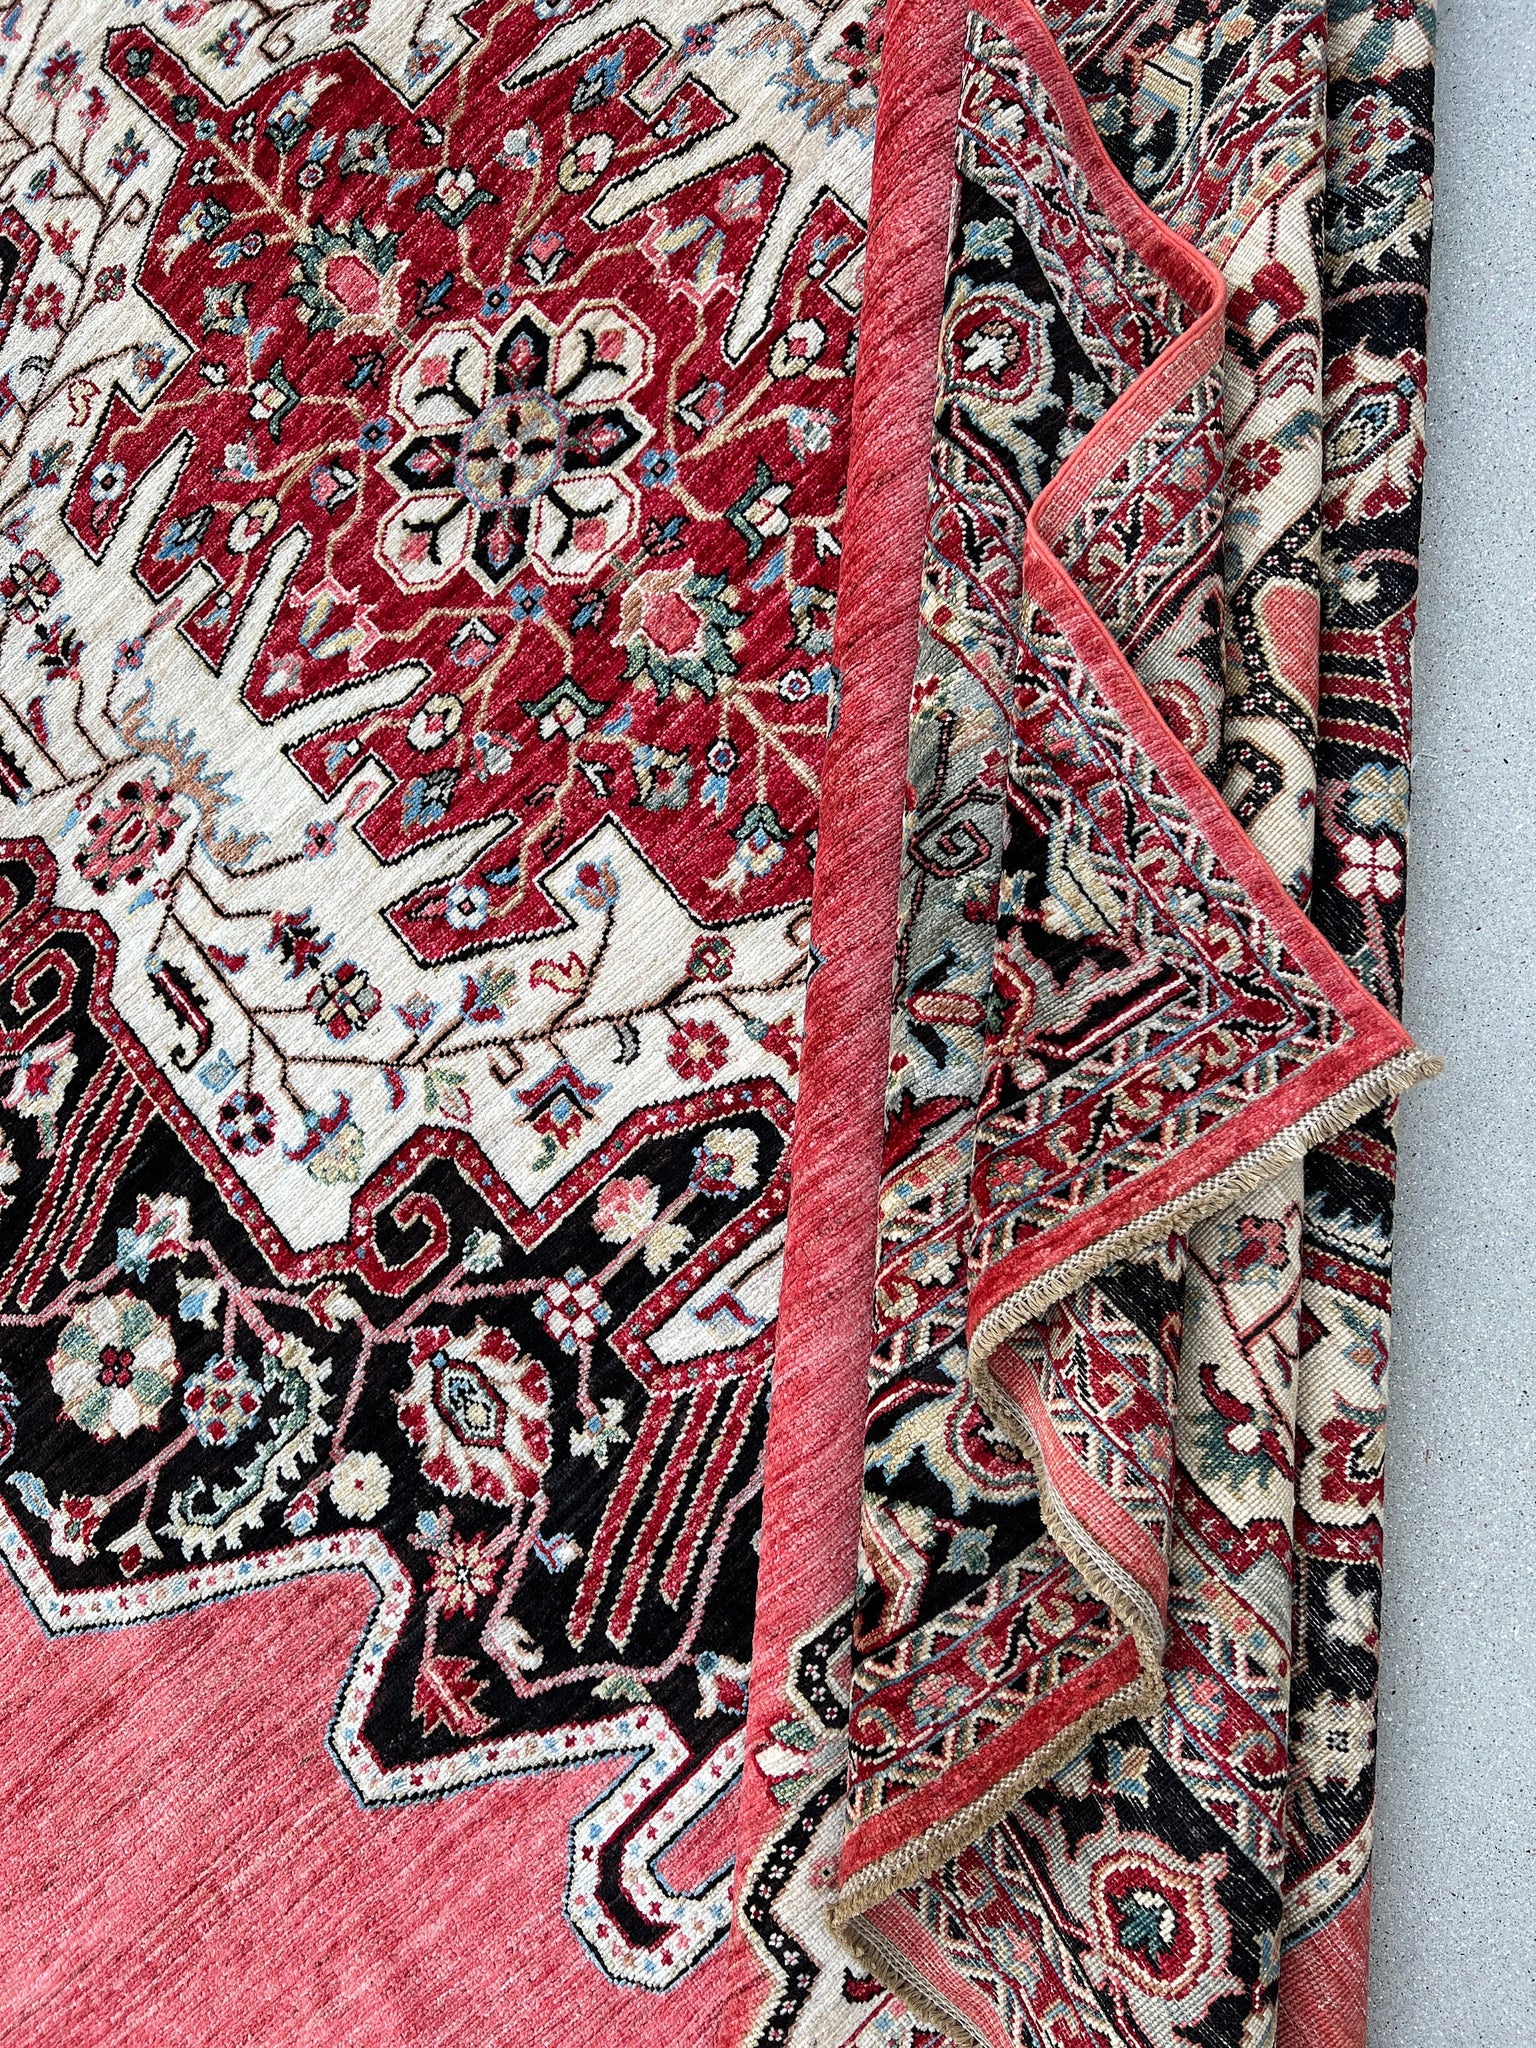 9x12 (275x365) Handmade Afghan Rug | Blush Pink Crimson Red Dark Brown Black White Cream Sky Blue Teal Green Ivory | Knotted Tribal Persian